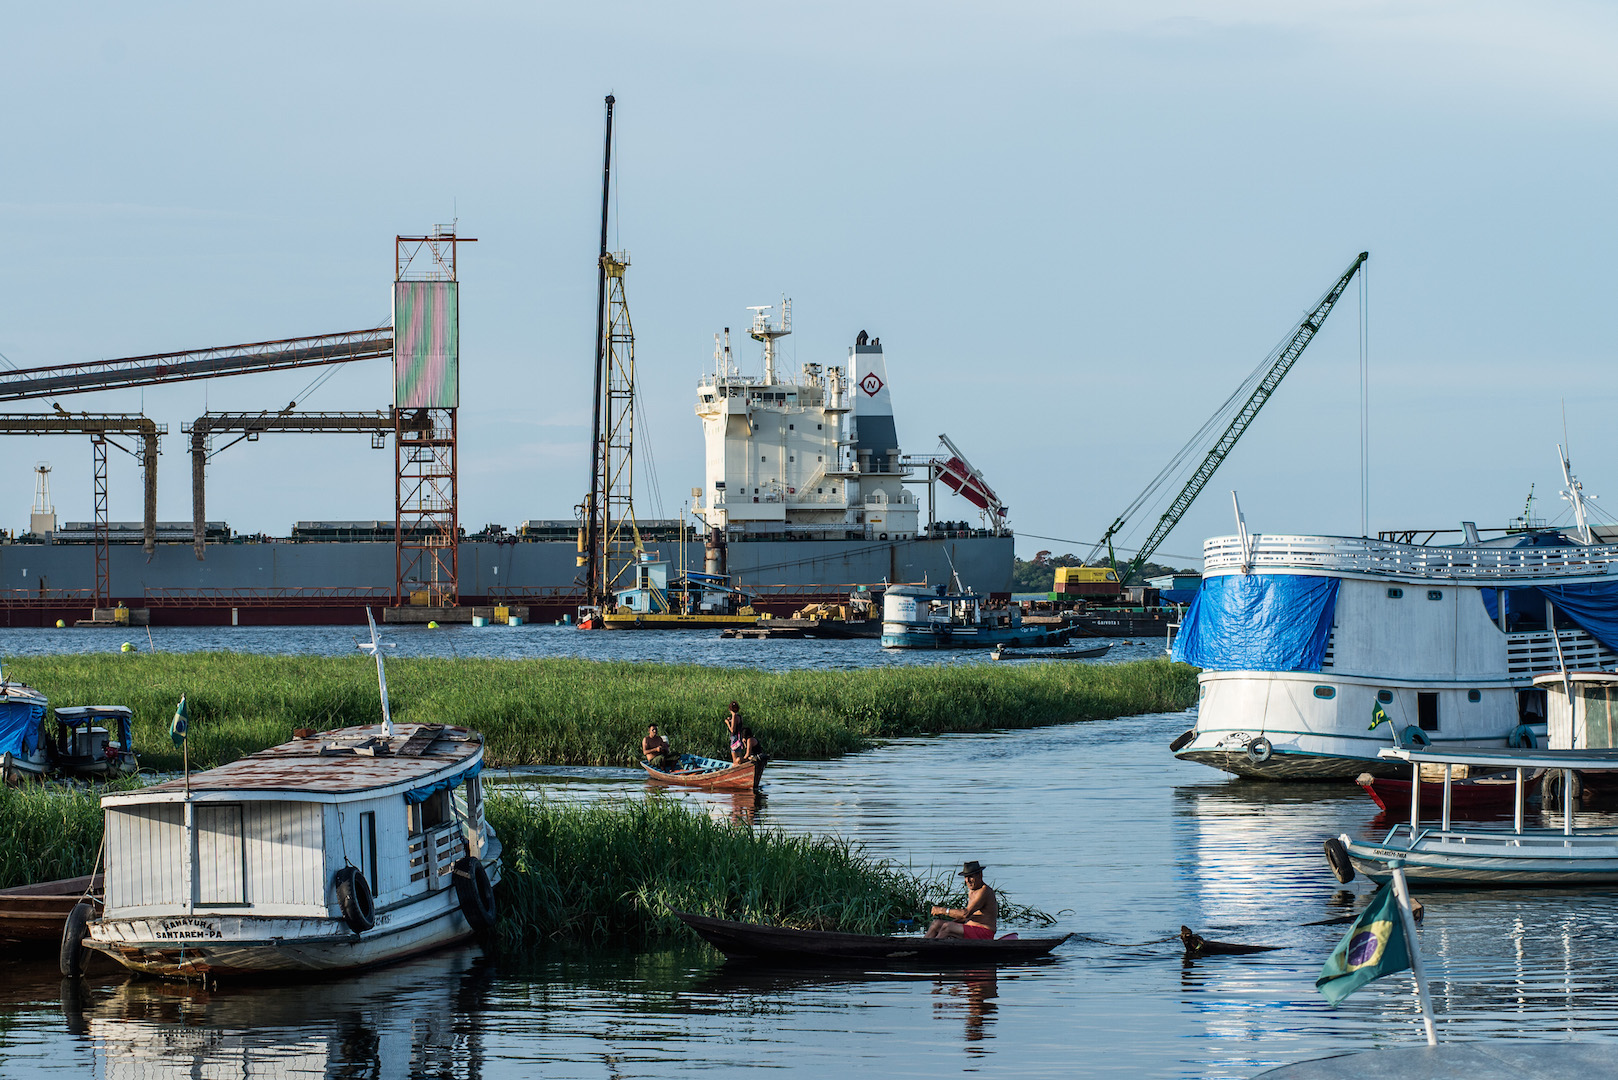 Riverine communities fish against the backdrop of Cargill's Santarem port 